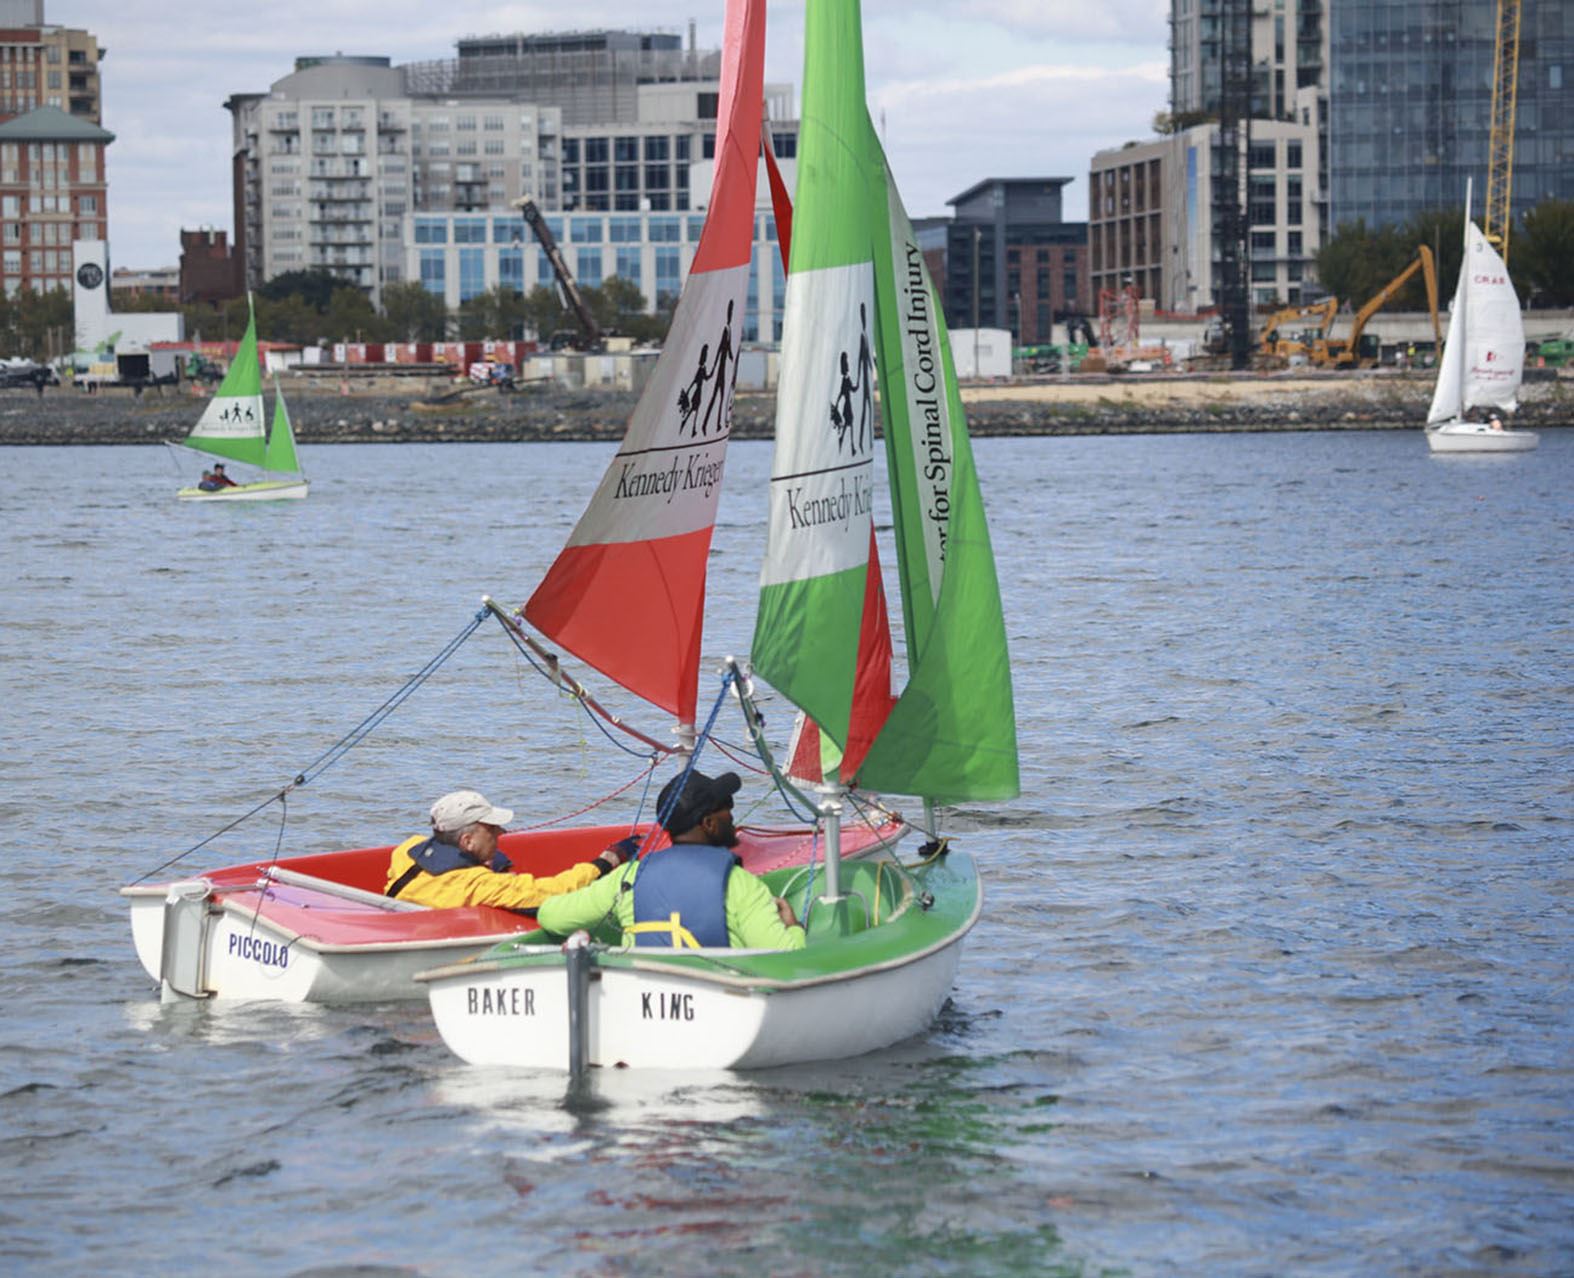 Two Adaptive sailors sailing colorful dinghies in Baltimore harbor